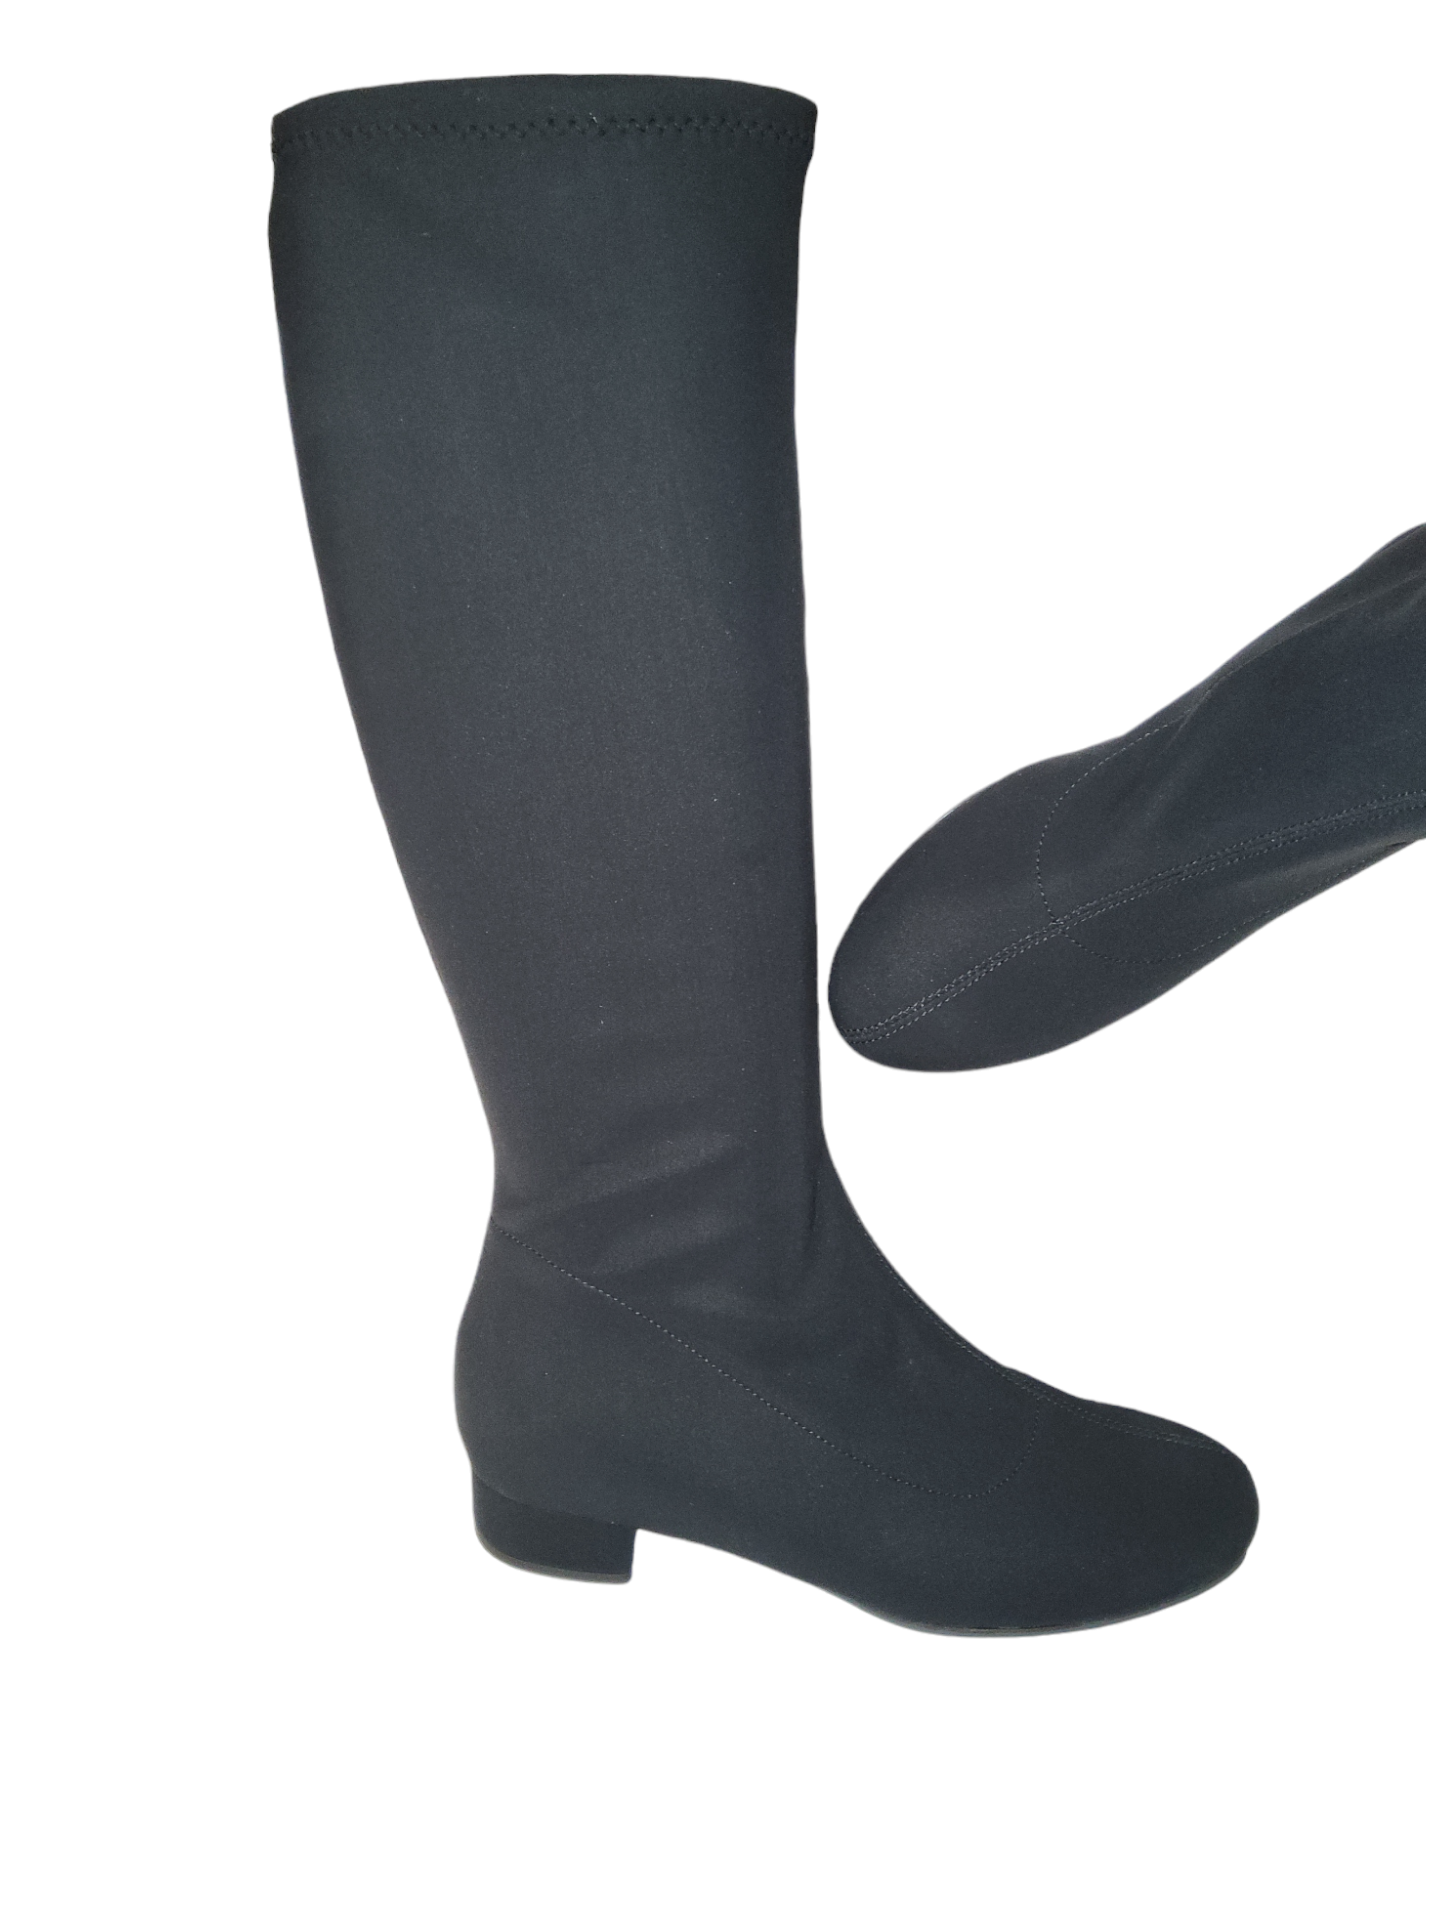 Black knee high boots